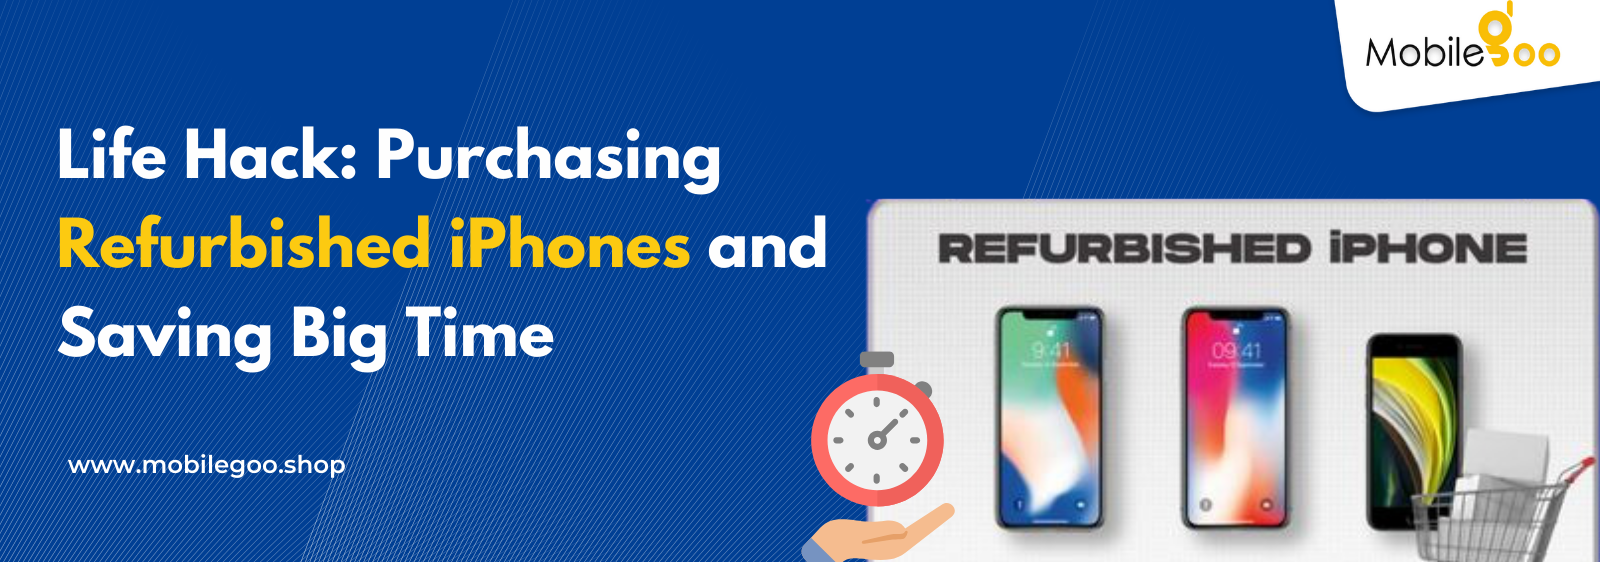 Life Hack: Purchasing Refurbished iPhones and Saving Big Time